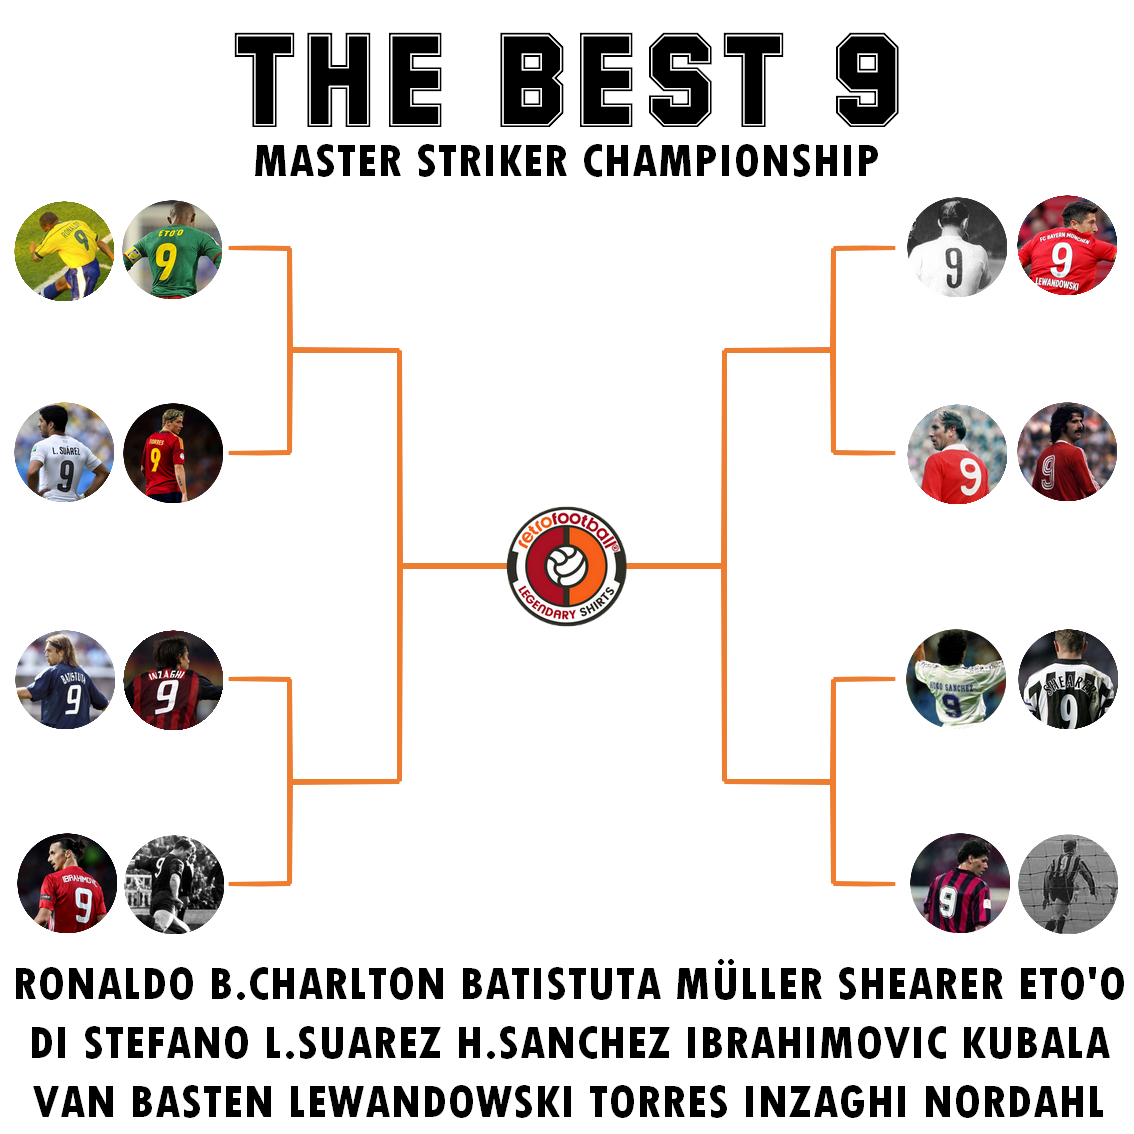 The best 9 - Retrofootball Master Striker Championship